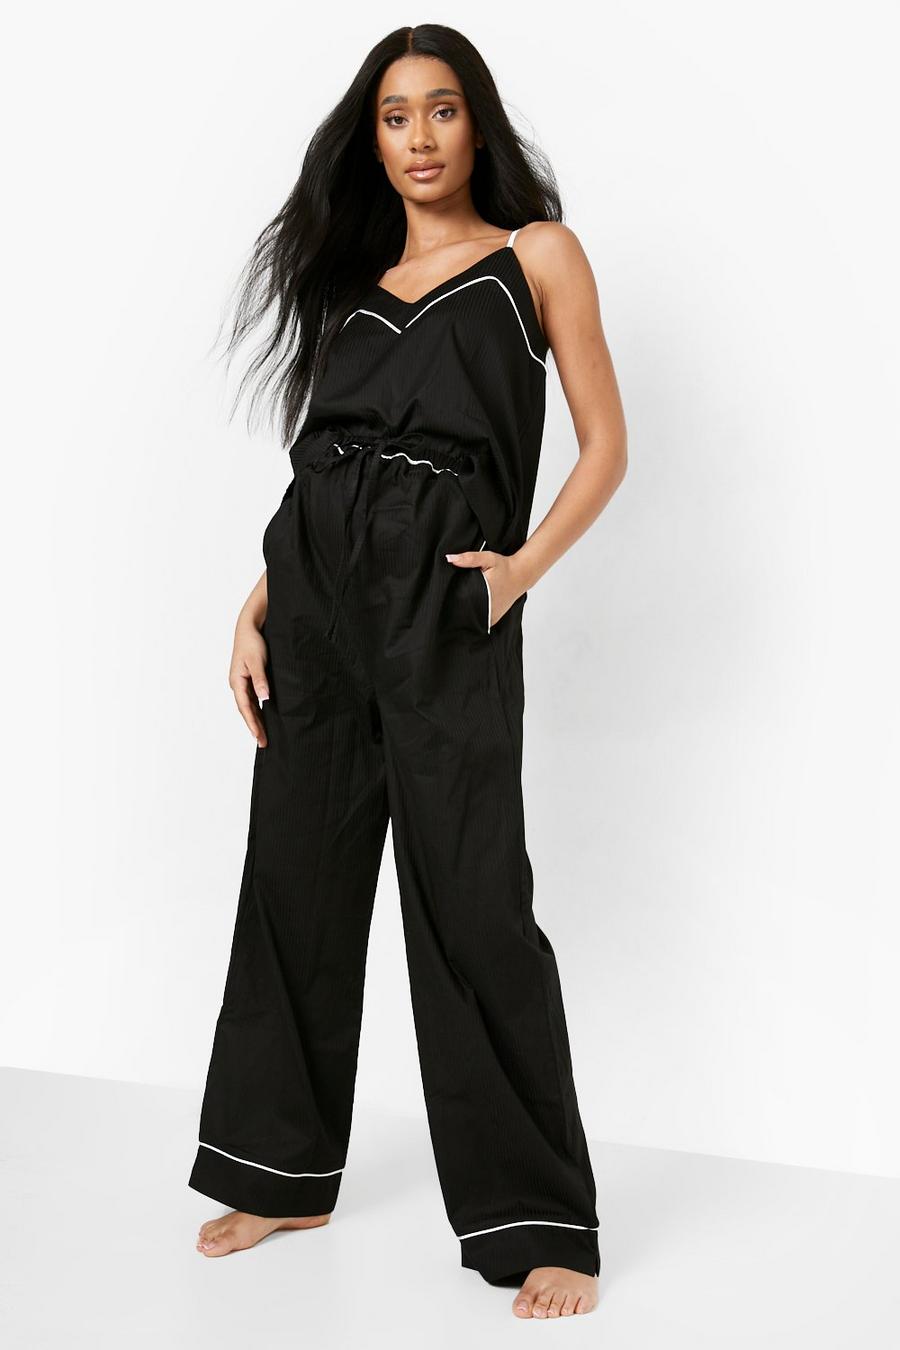 Pantalón de pijama Premamá de raso Premium con estampado de rayas, Black negro